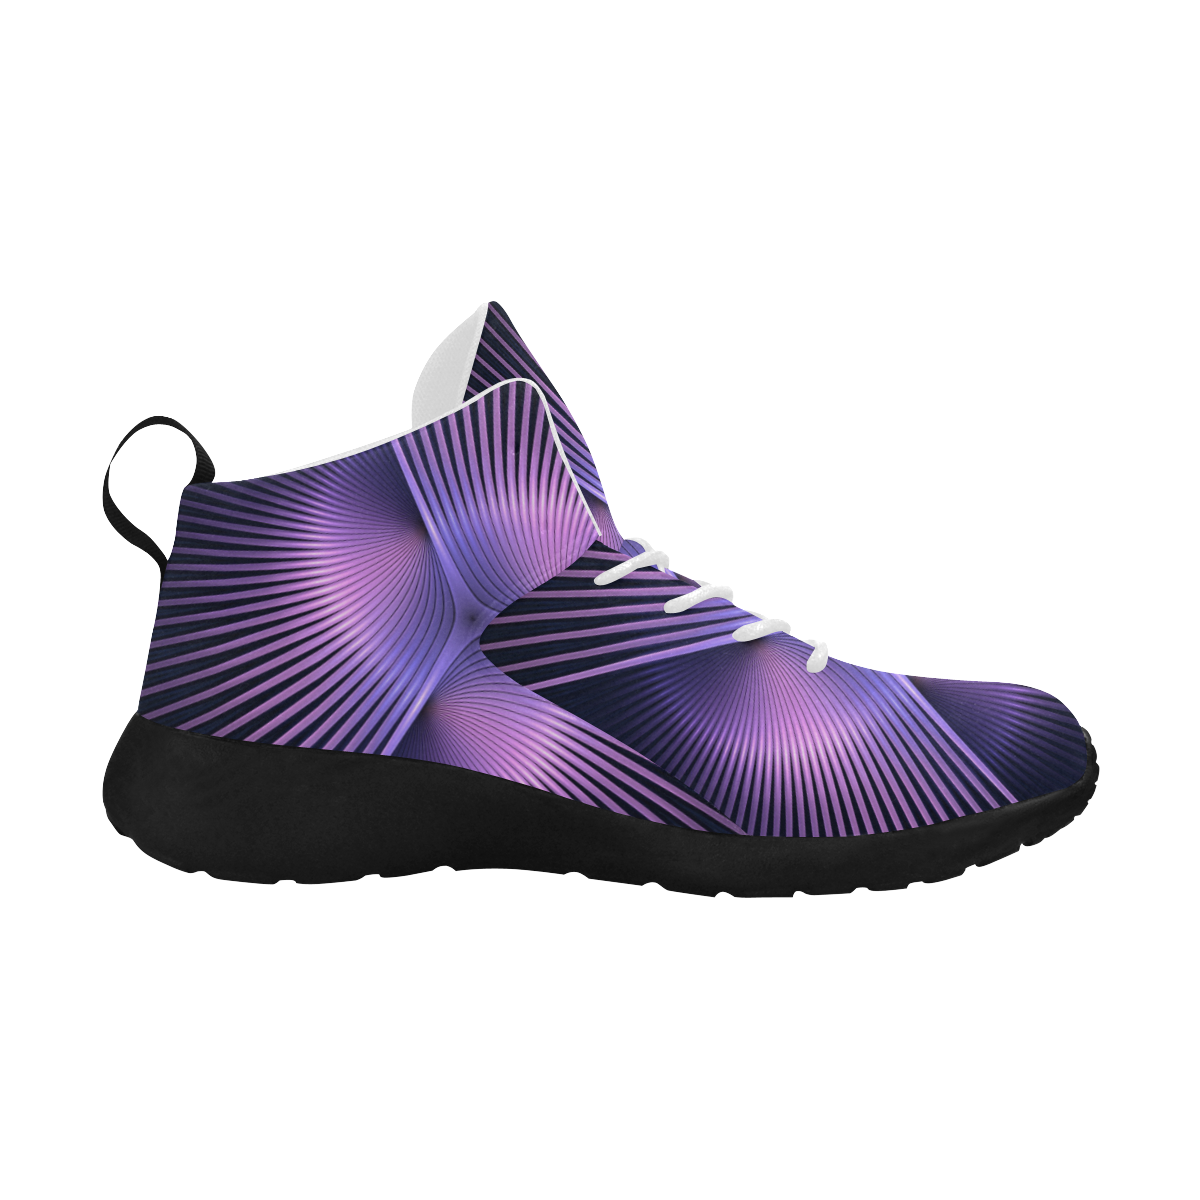 Purple Rays Men's Chukka Training Shoes (Model 57502)